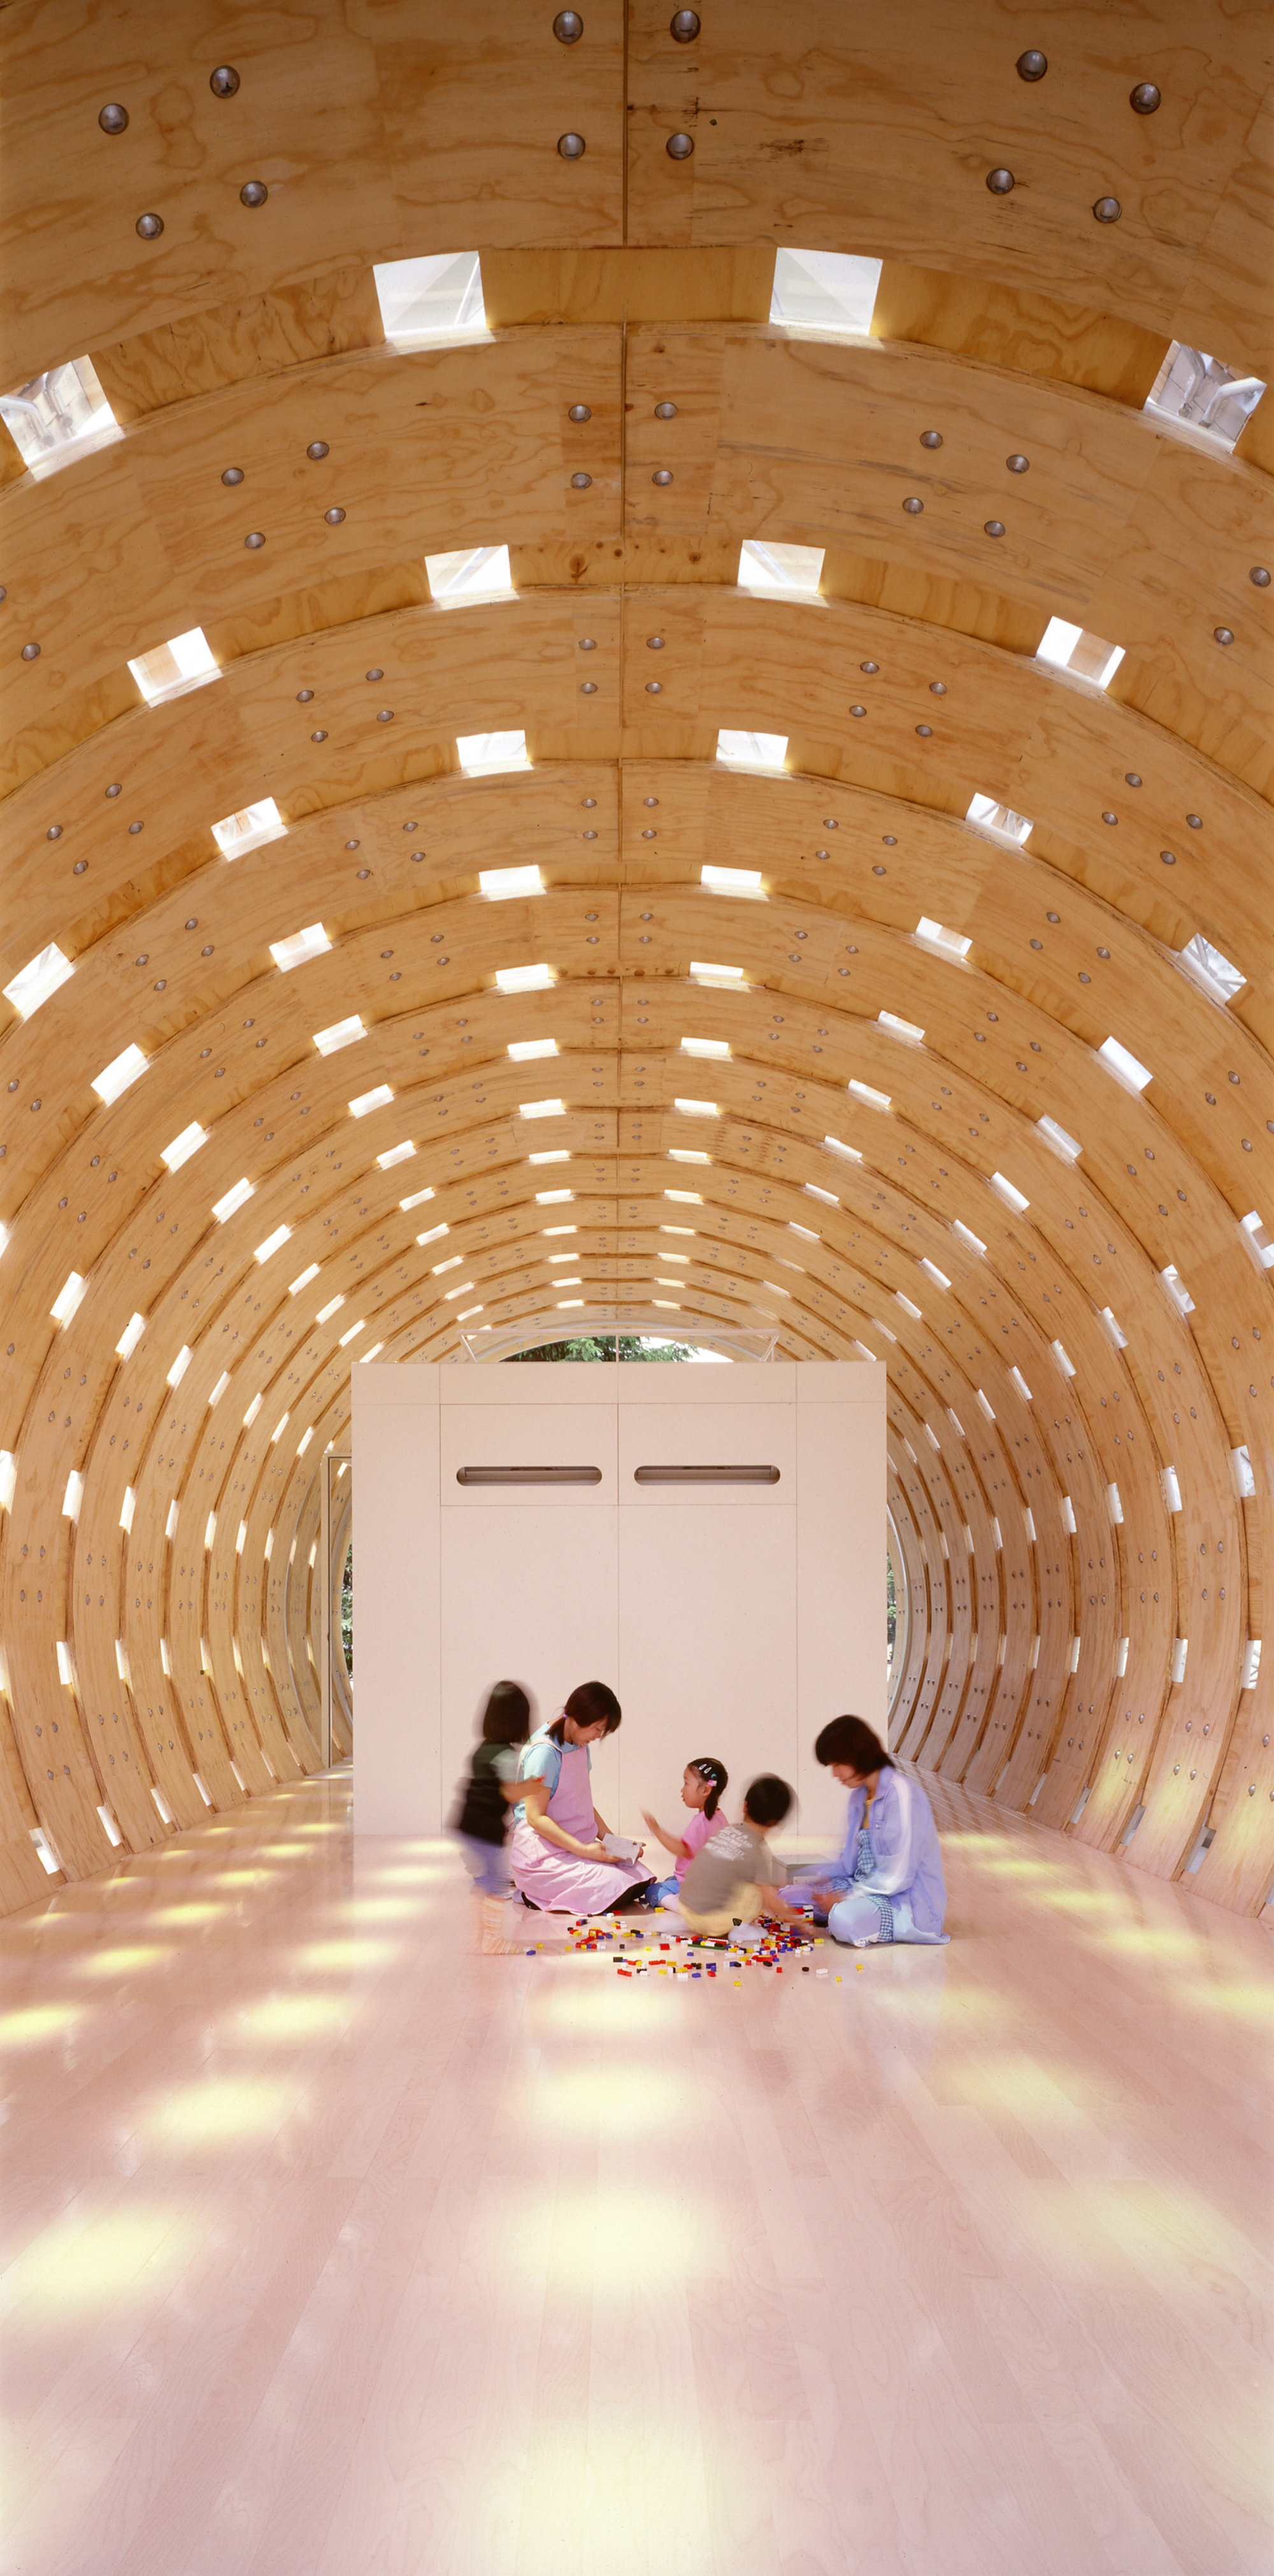 Shigeru Ban: Timber in Architecture by Shigeru Ban © Rizzoli New York, 2022.